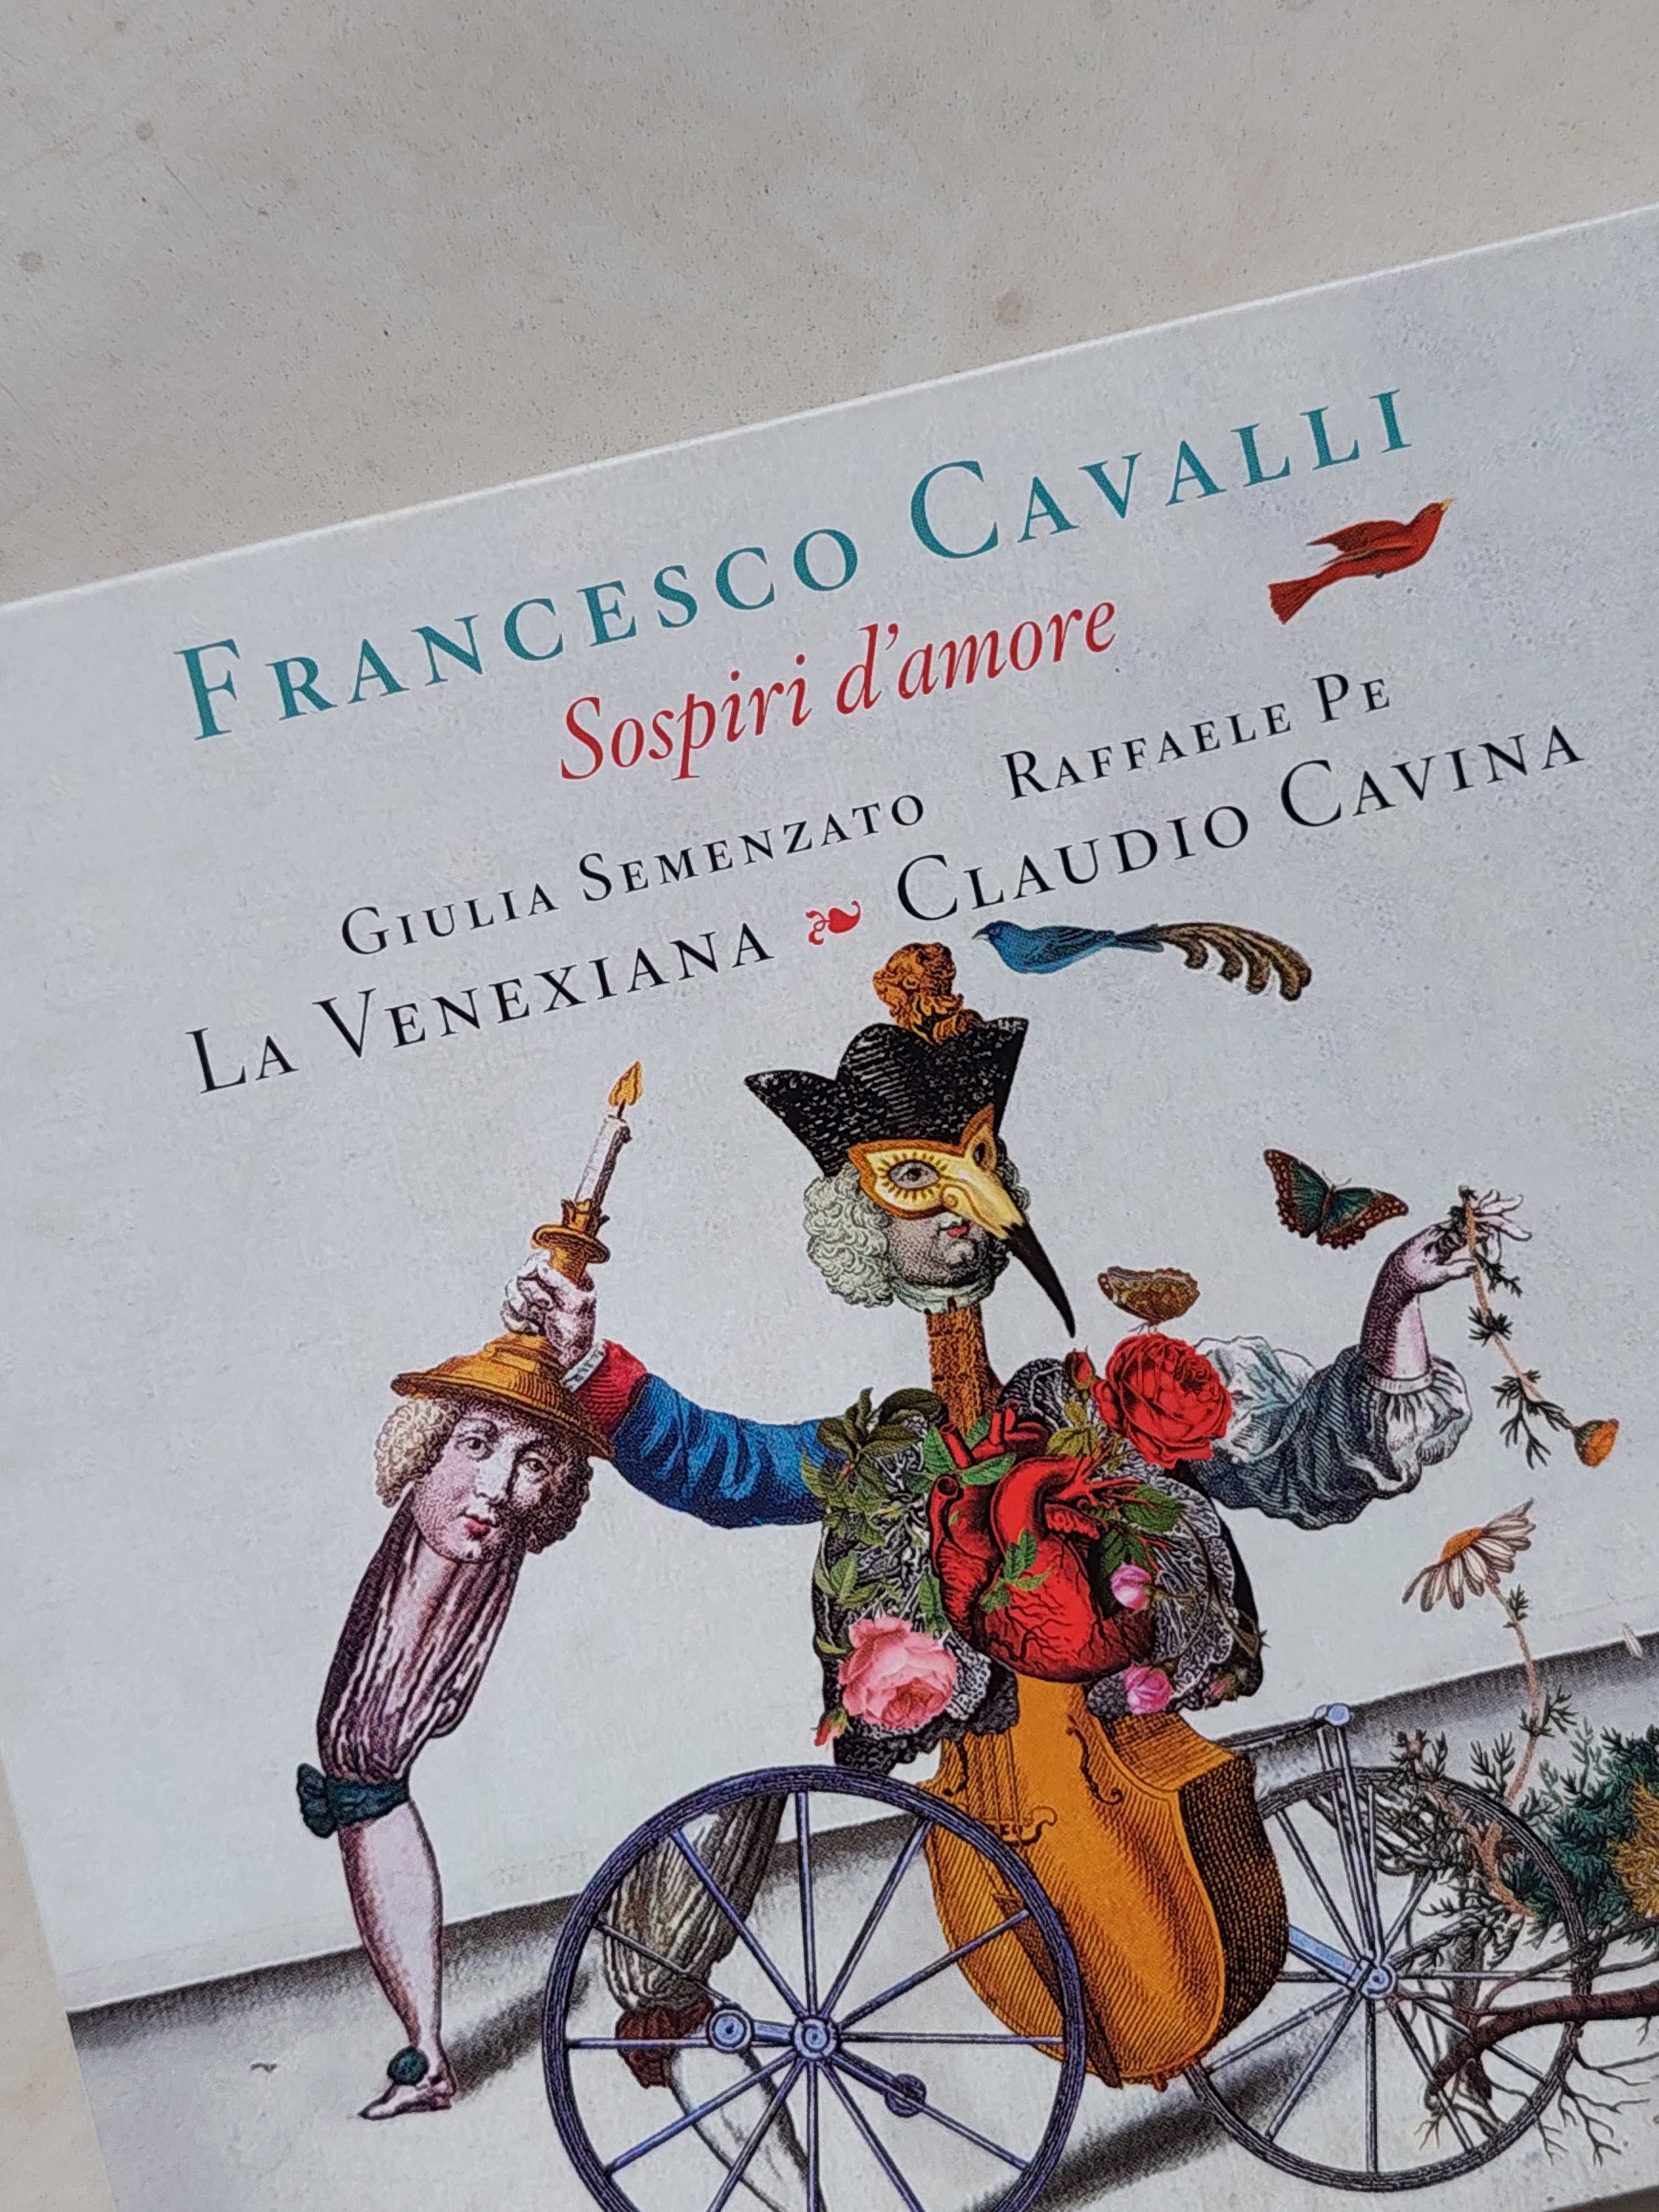 Francesco Cavalli: Sospiri d'amore - Opera duets and arias